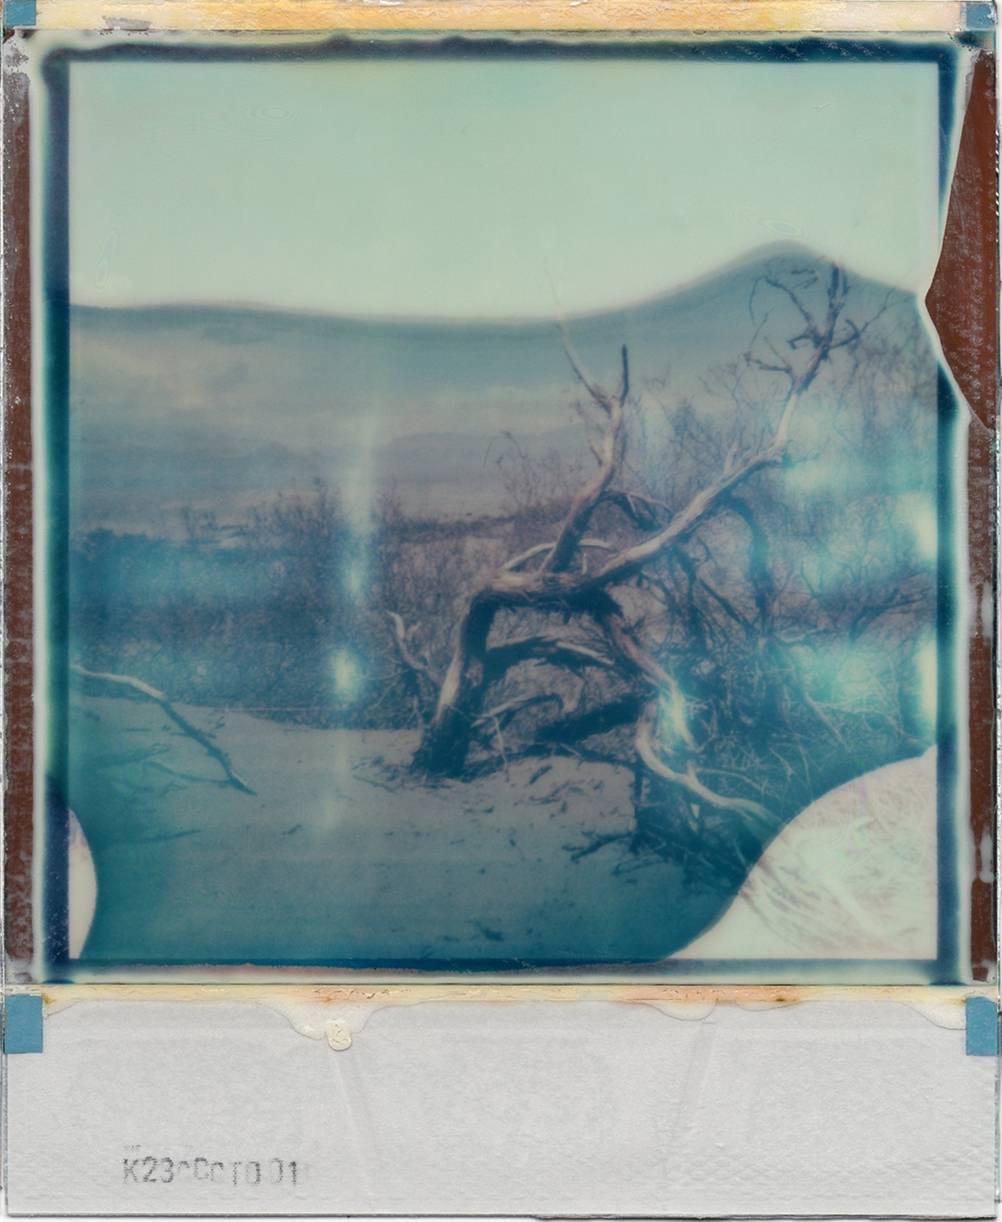 Desert Dream - based on 2 Polaroids - Contemporary Photograph by Julia Beyer